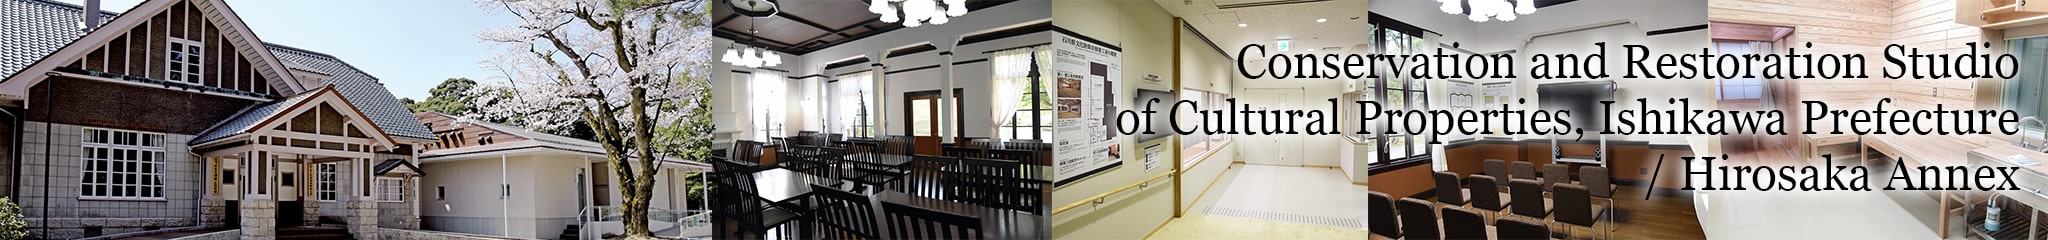 Conservation and Restoration Studio of Cultural Properties, Ishikawa Prefecture / Hirosaka Annex